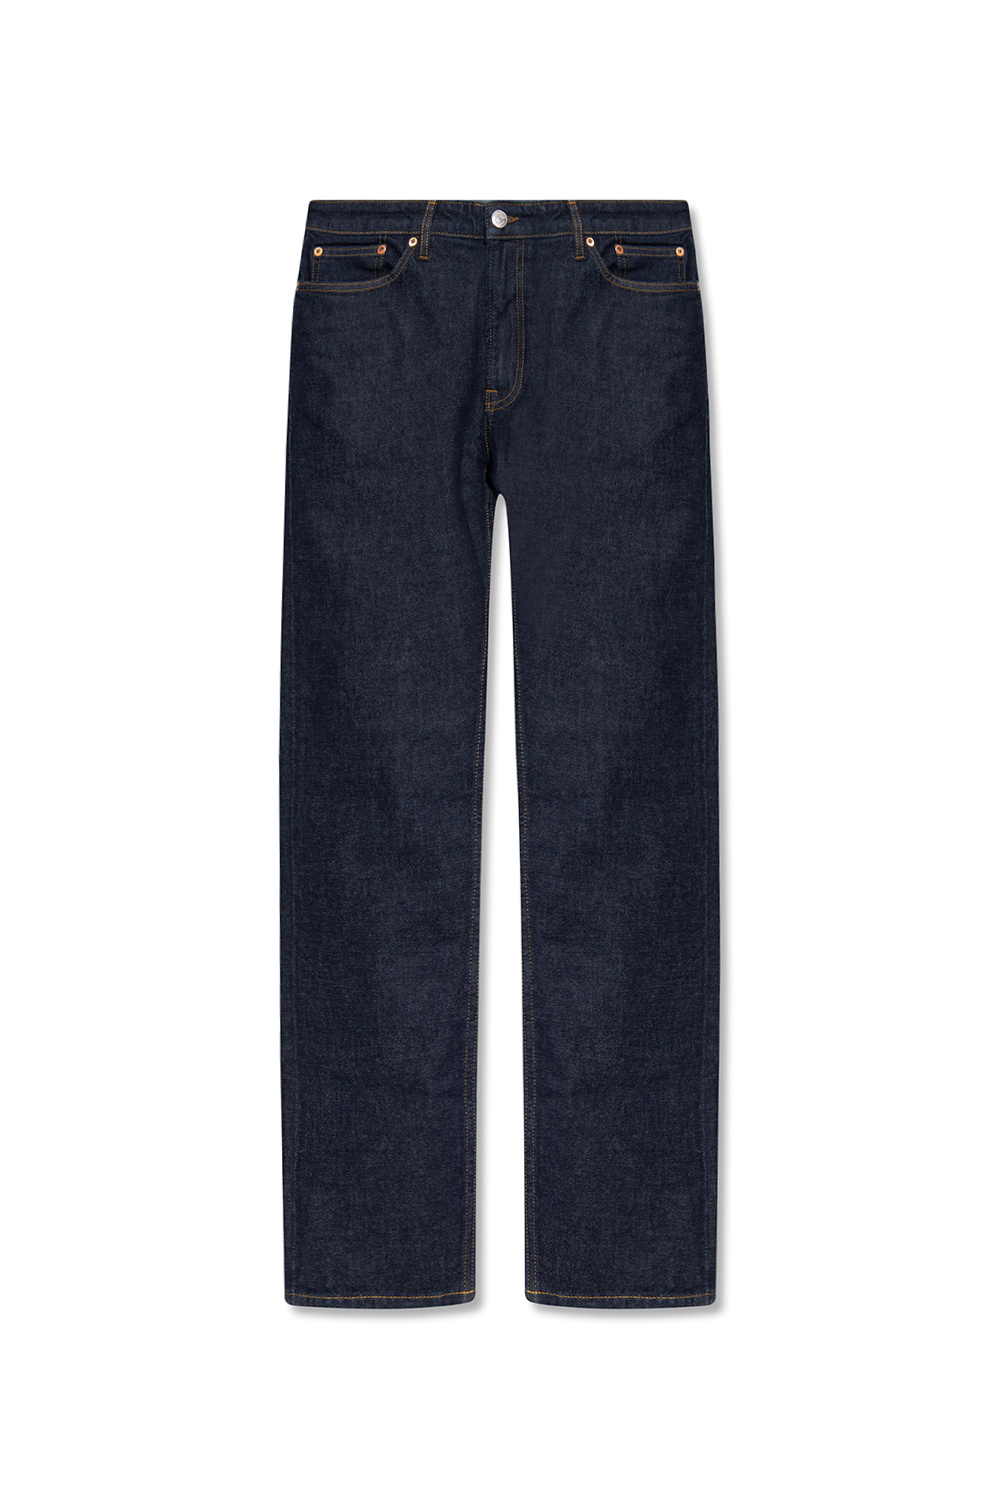 Samsøe Samsøe Organic cotton jeans